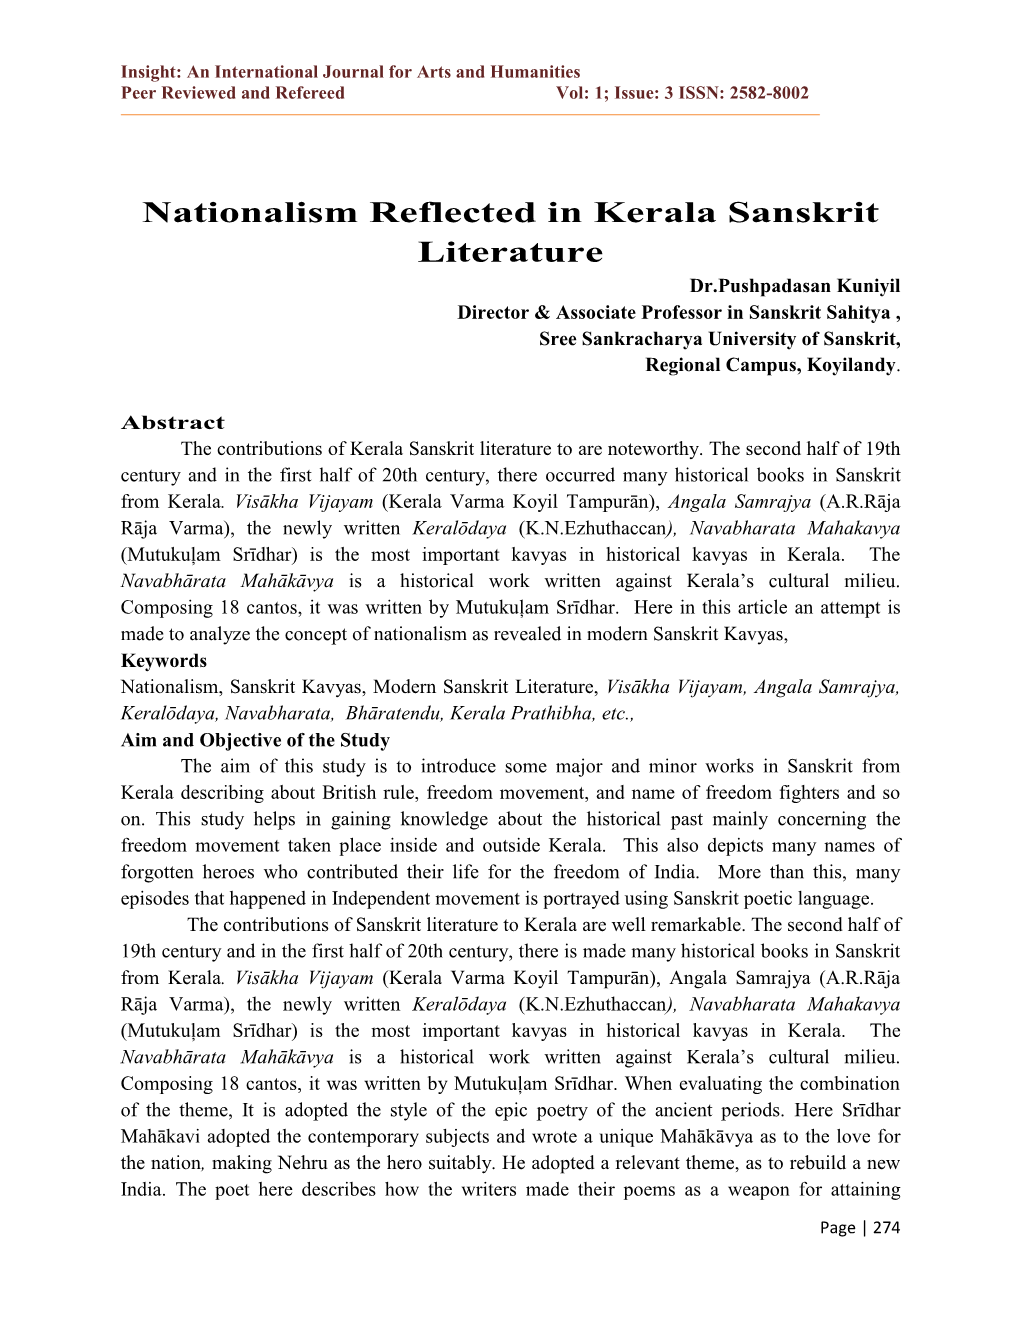 Nationalism Reflected in Kerala Sanskrit Literature